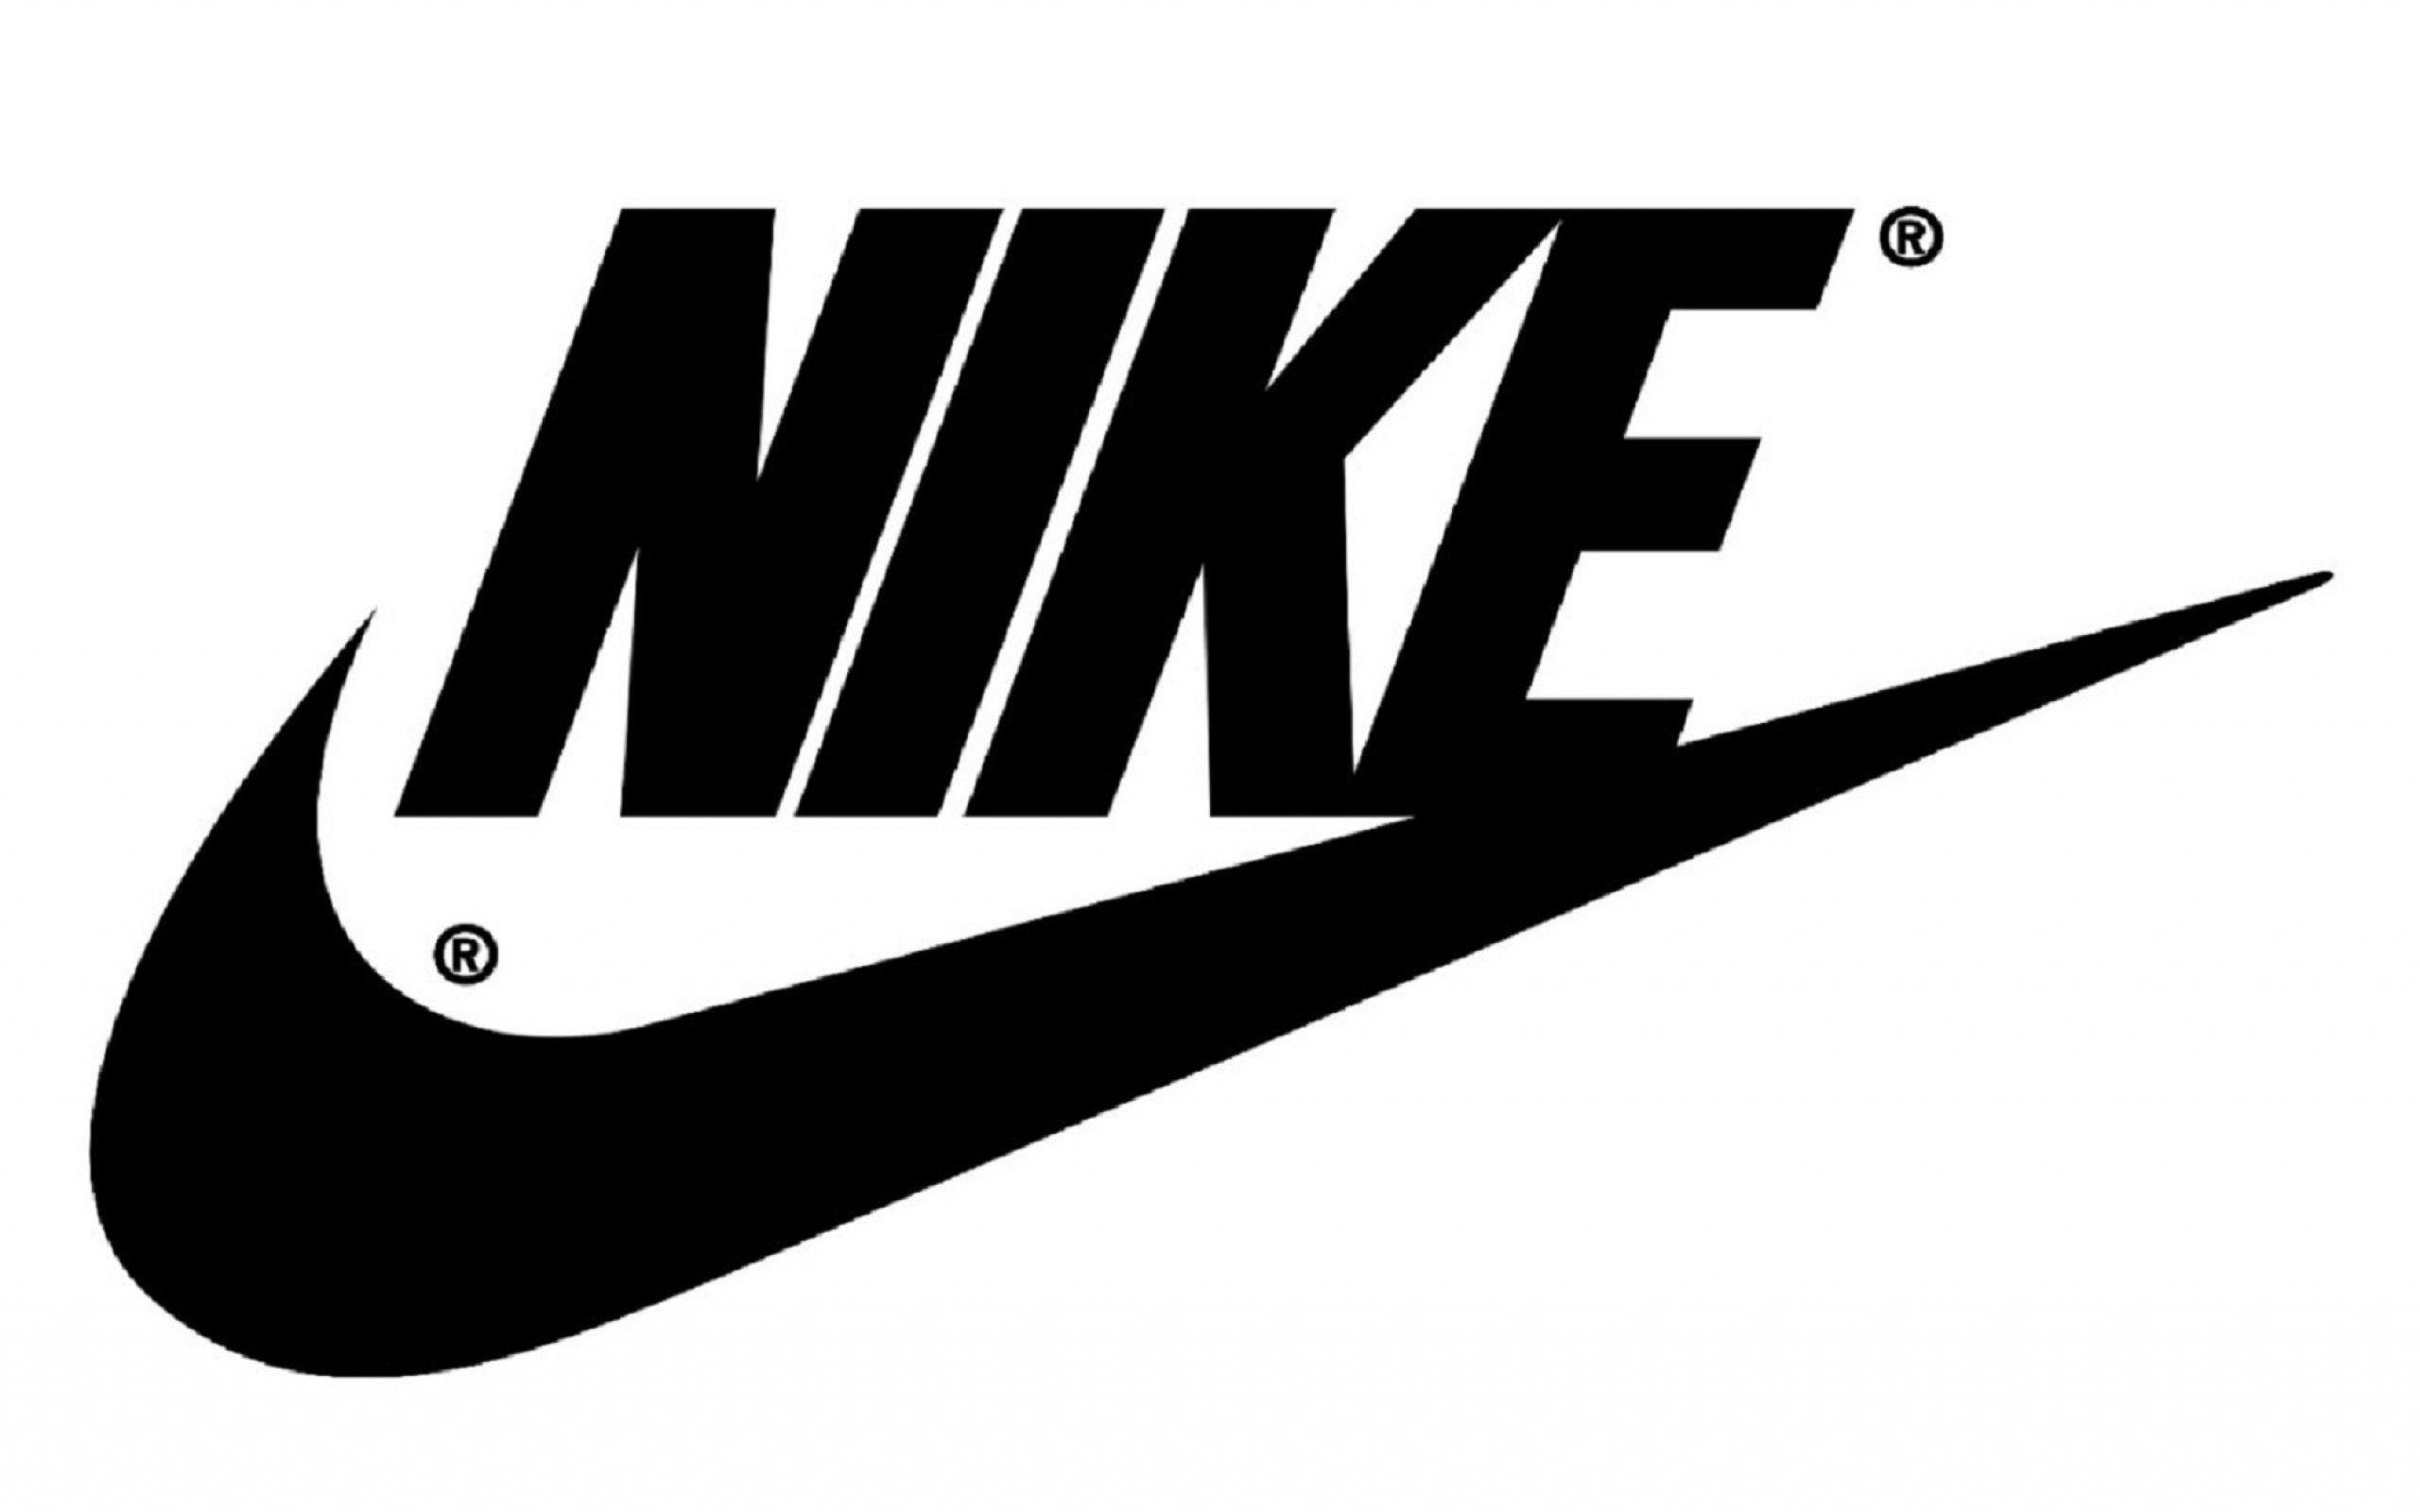 Niike Logo - Precise Continental The Story of the Designer who made Nike's Swoosh ...